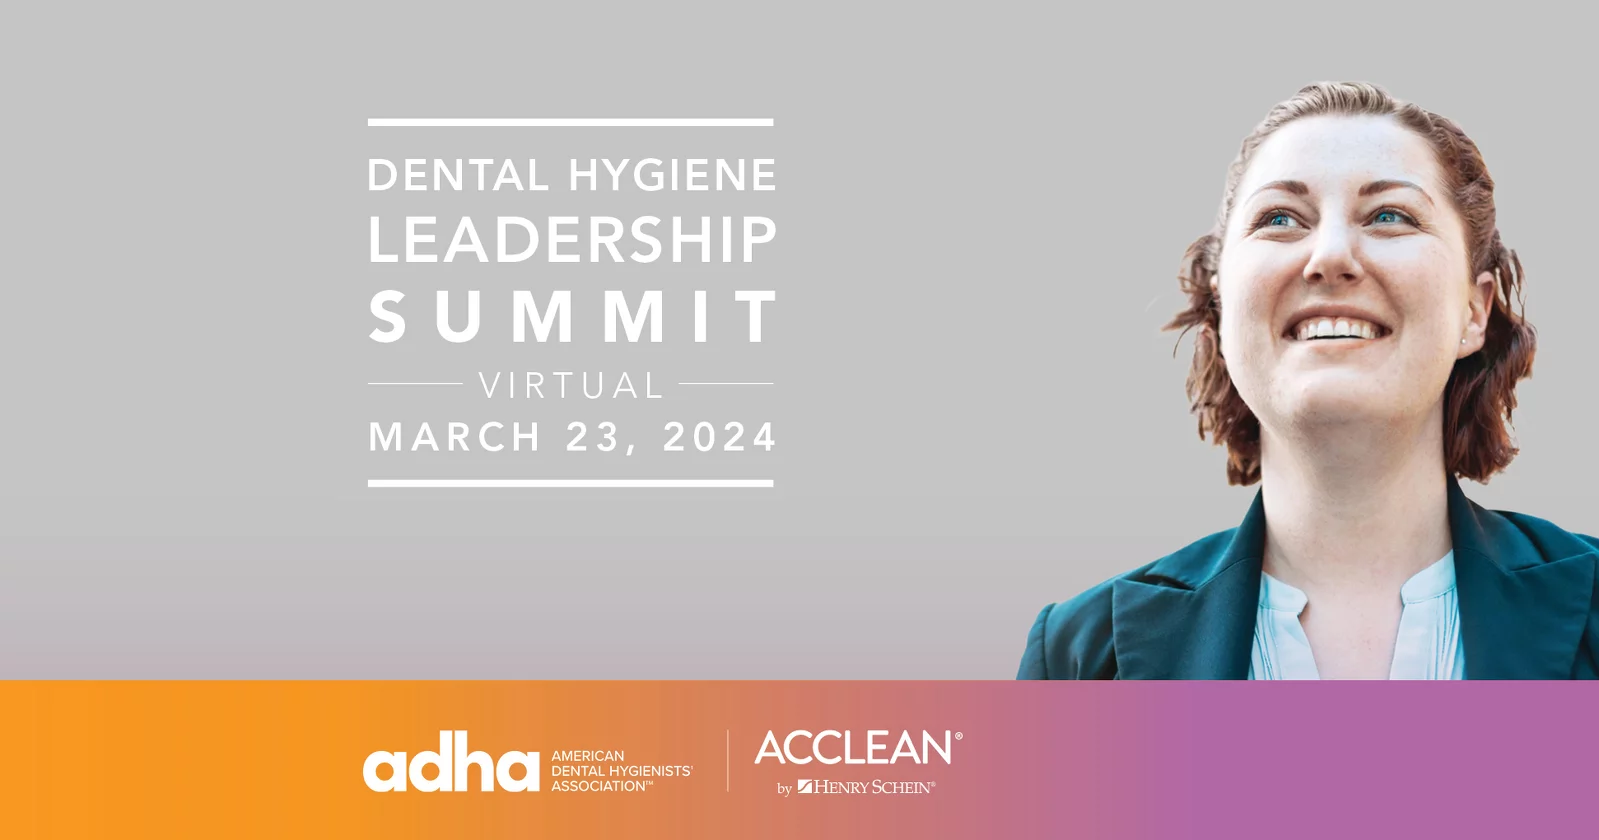 Dental Hygiene Leadership Summit, Woman looking upward and smiling